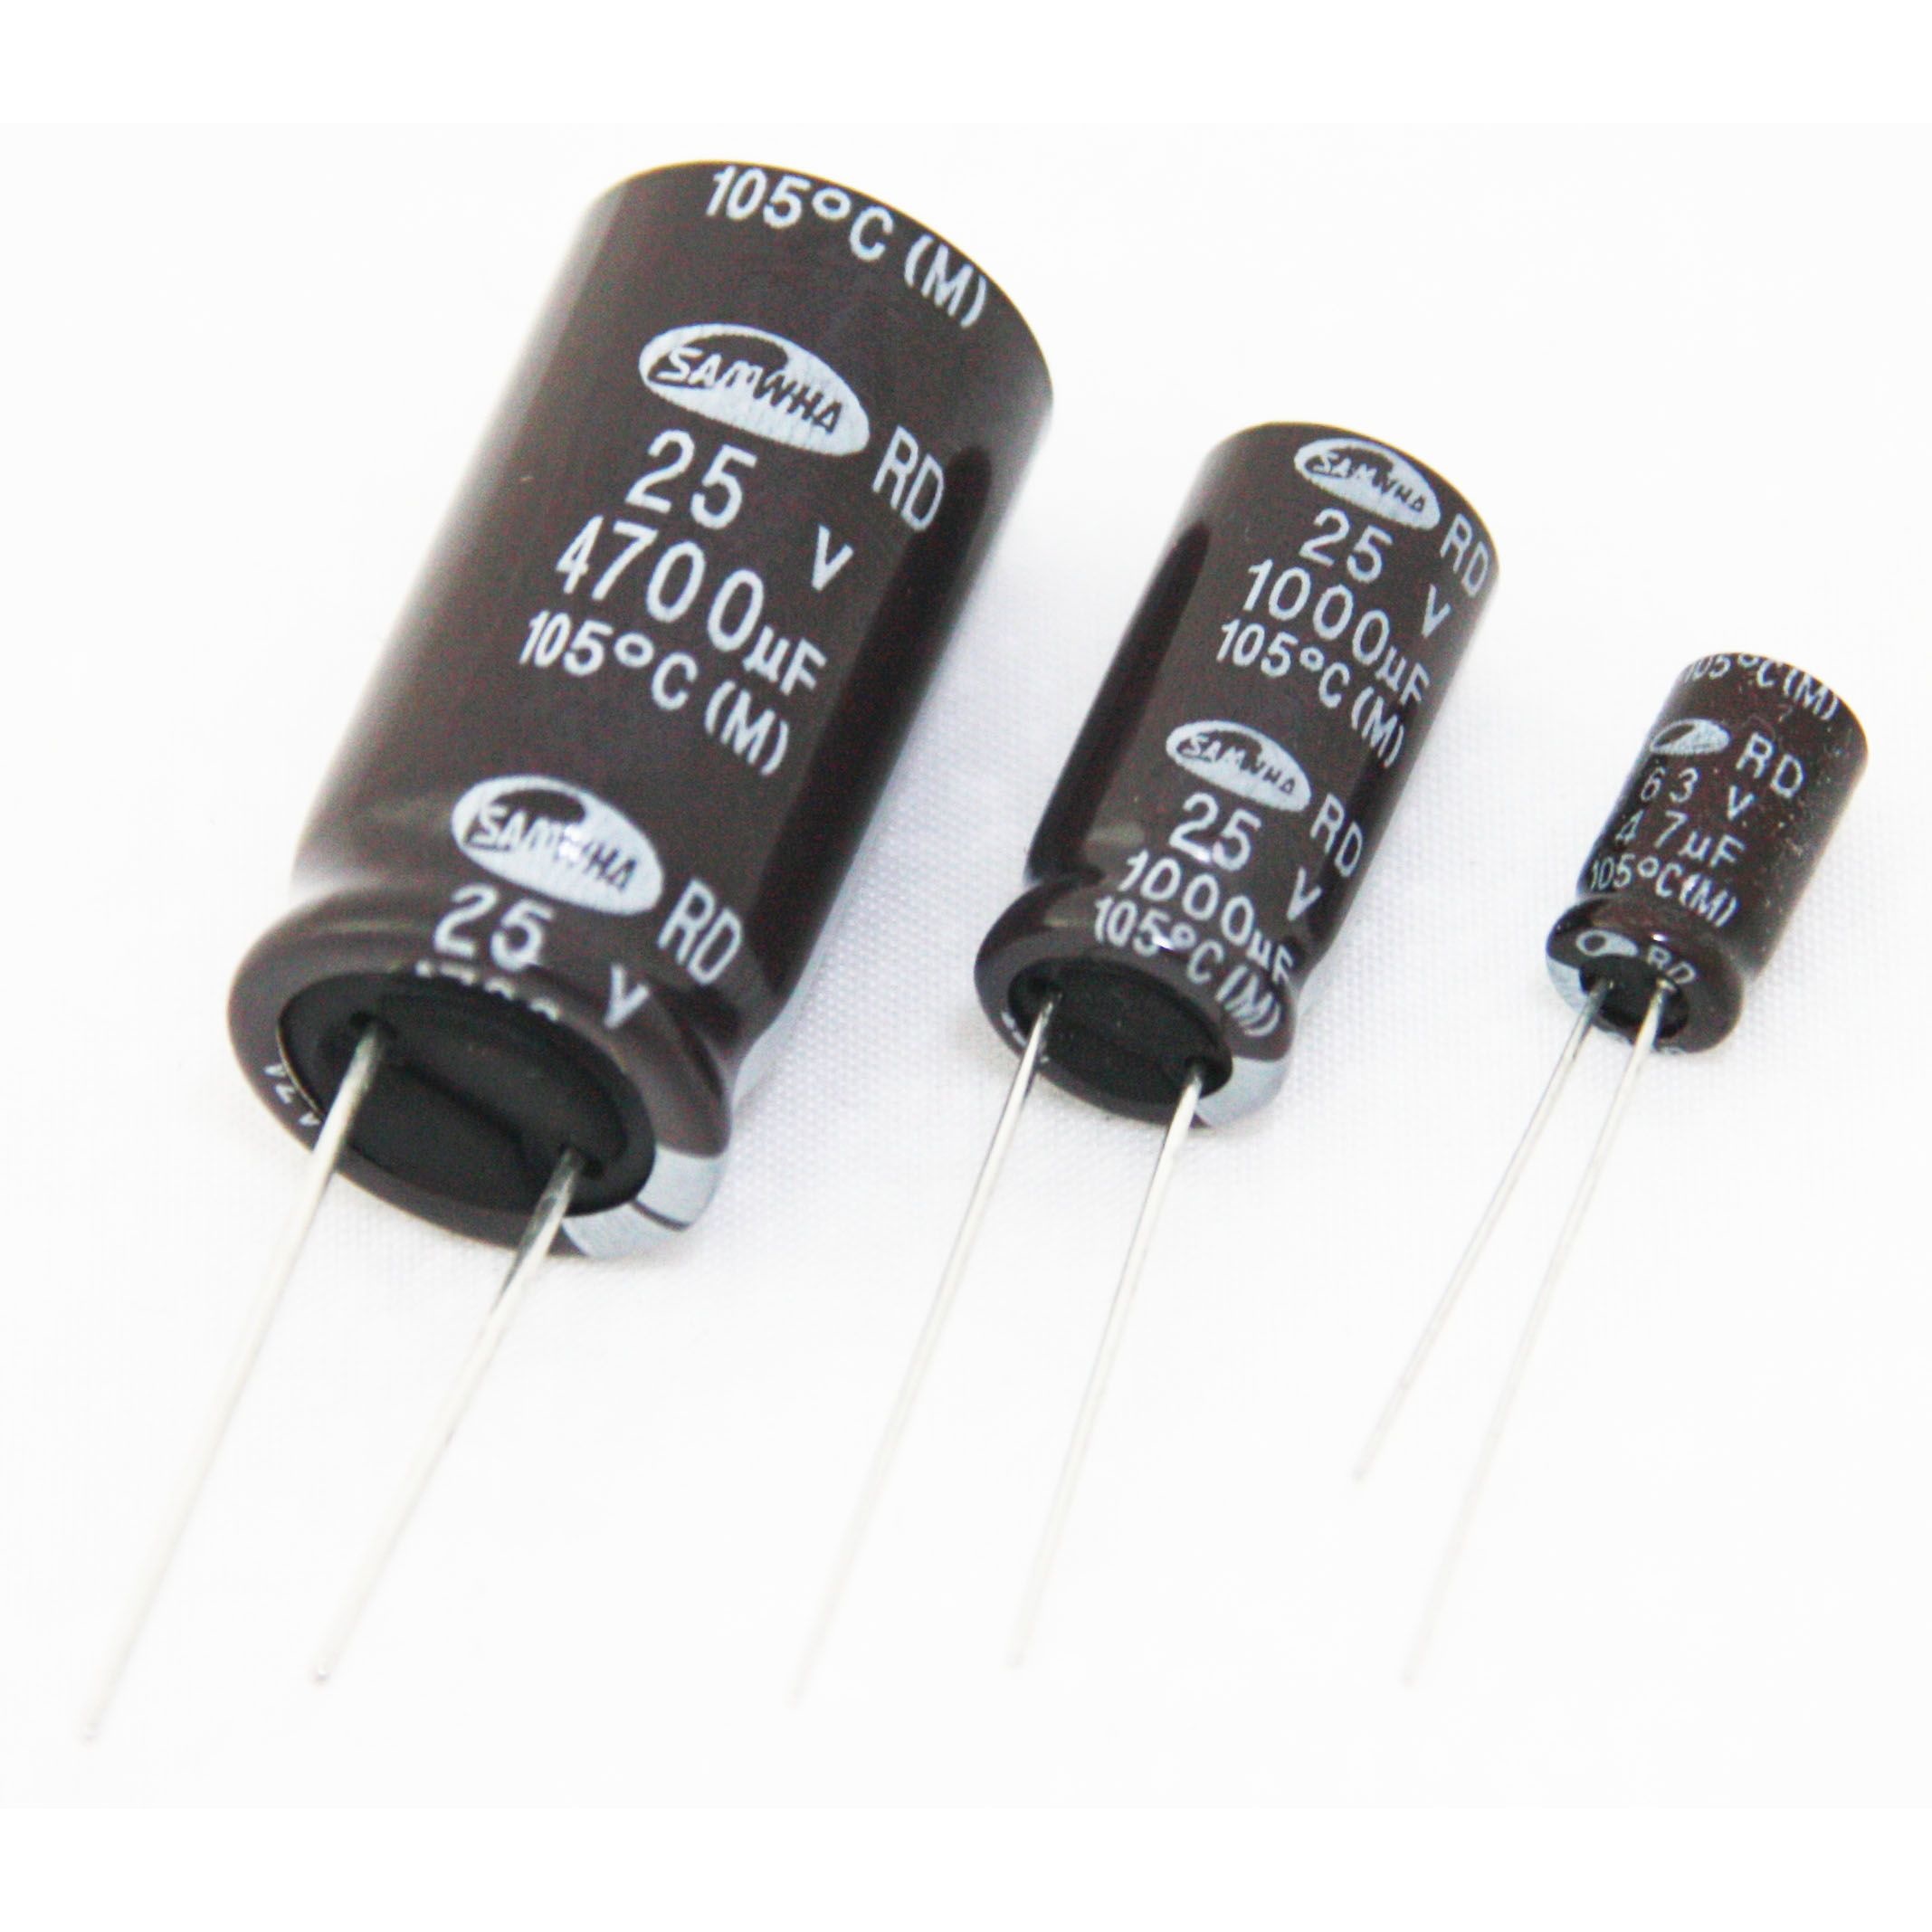 Electrolytic capacitor 105° 3300uF-63V